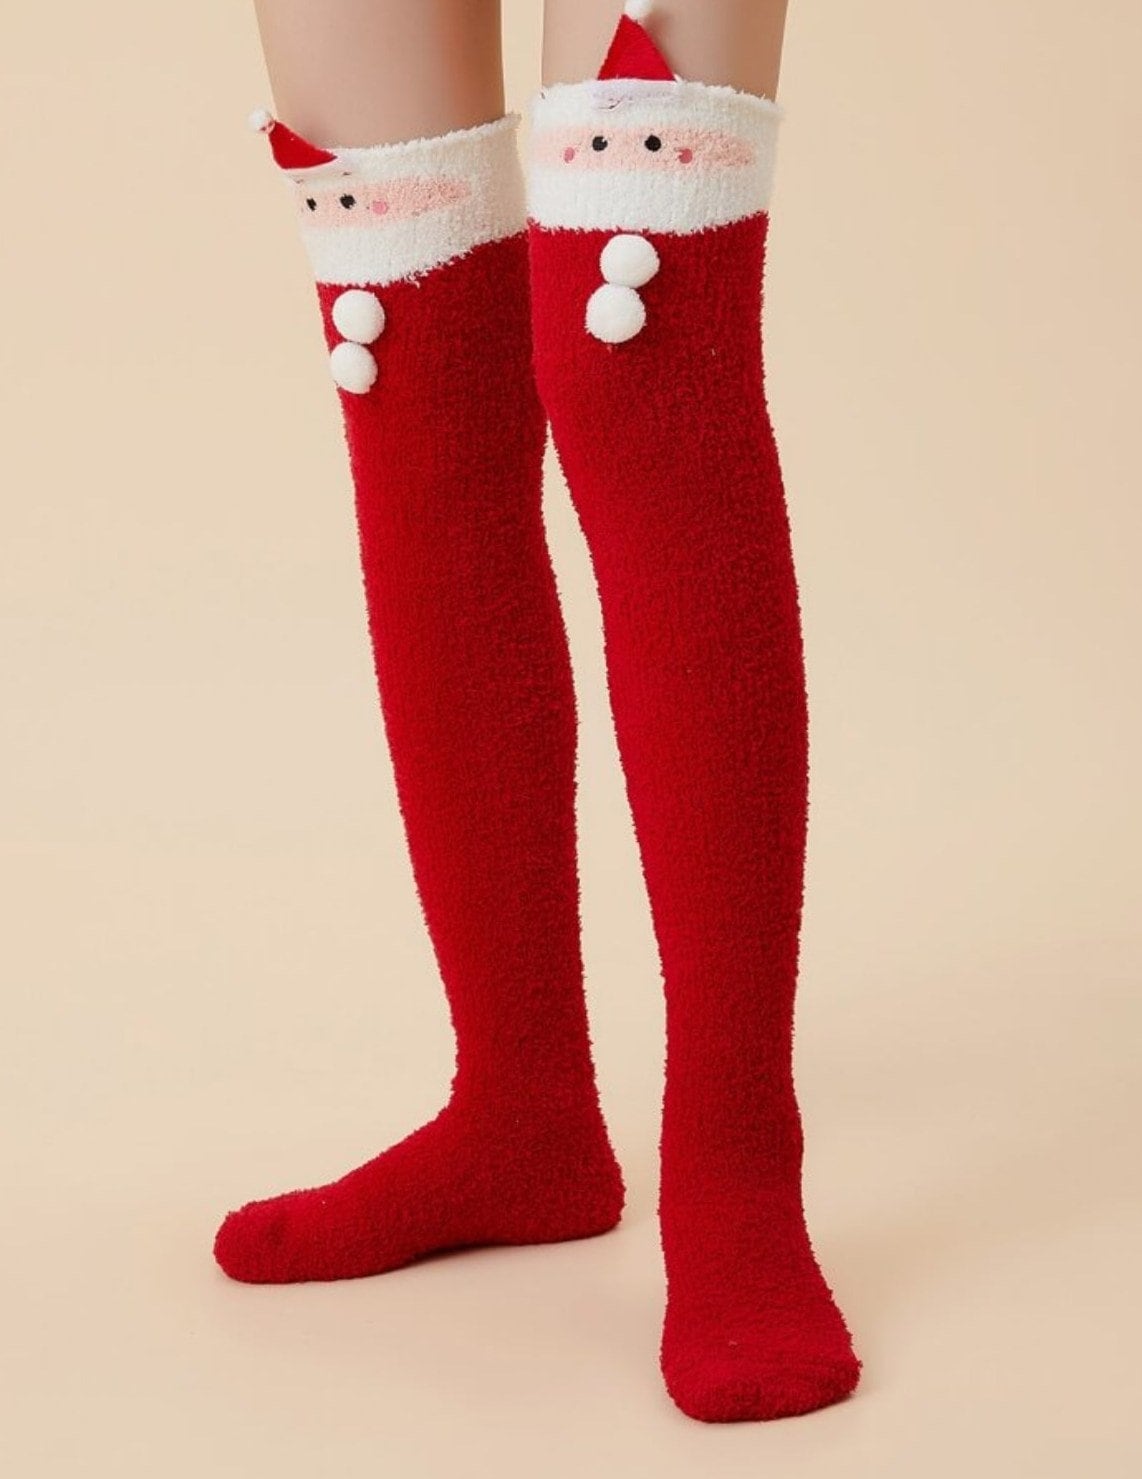 Biruil Fuzzy Socks Over Knee High Cute Cartoon Animal Winter Leg Warmers Stockings 